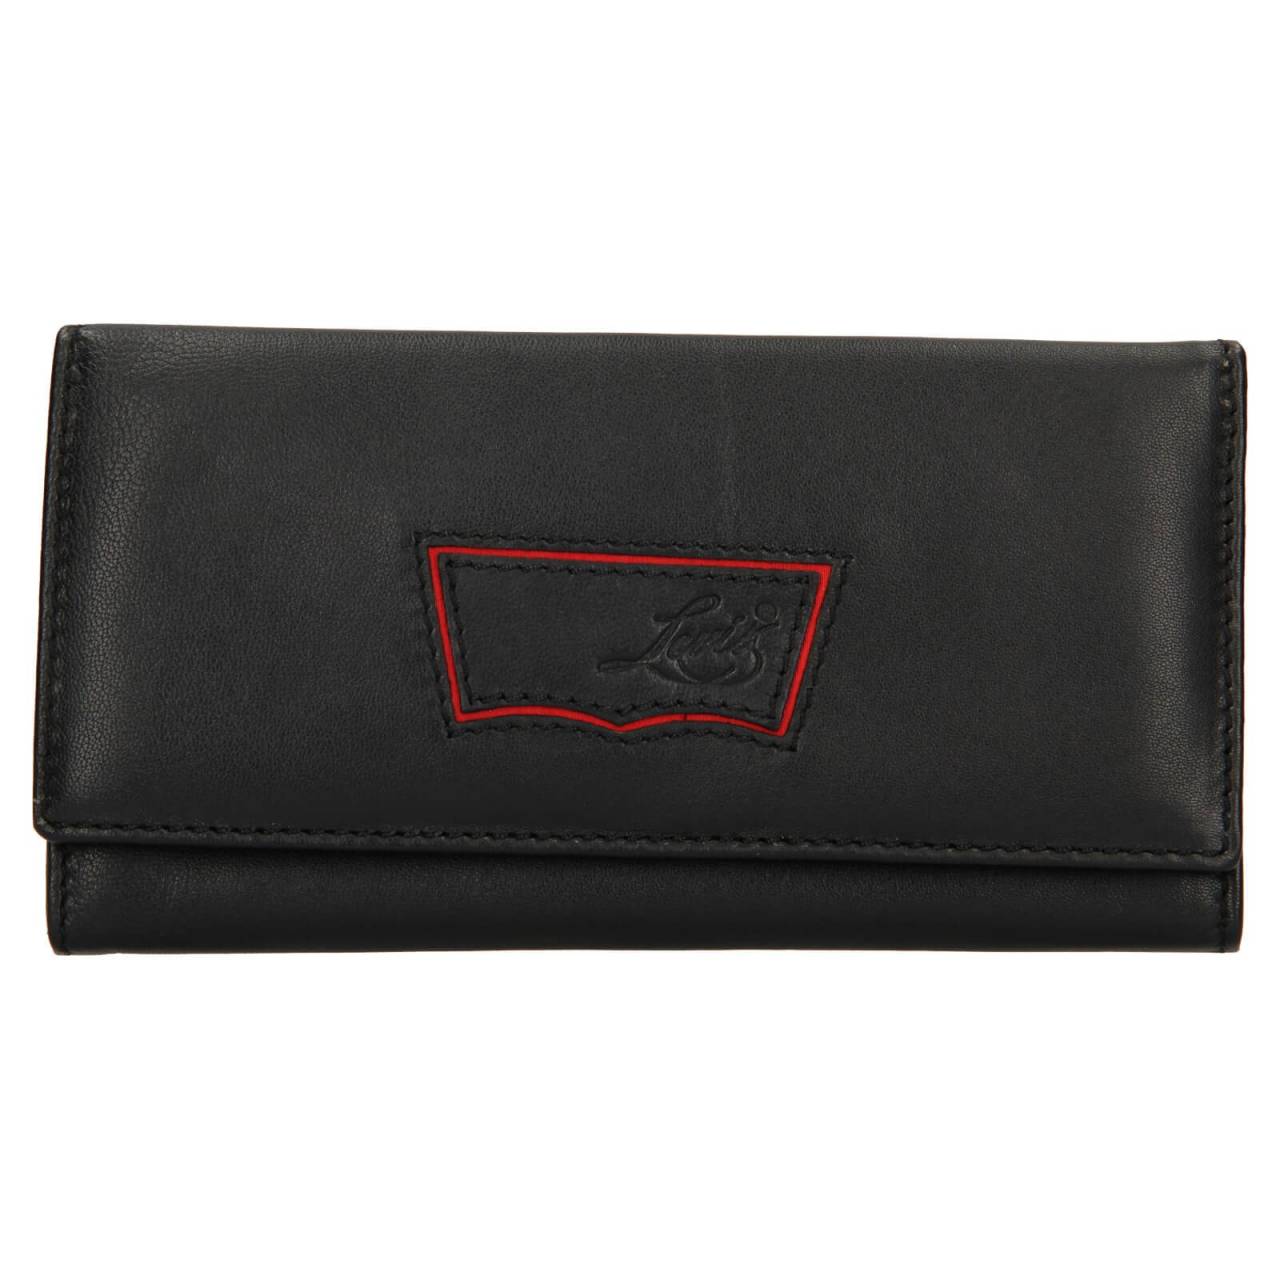 Dámska kožená peňaženka Levis Madison - čierna.